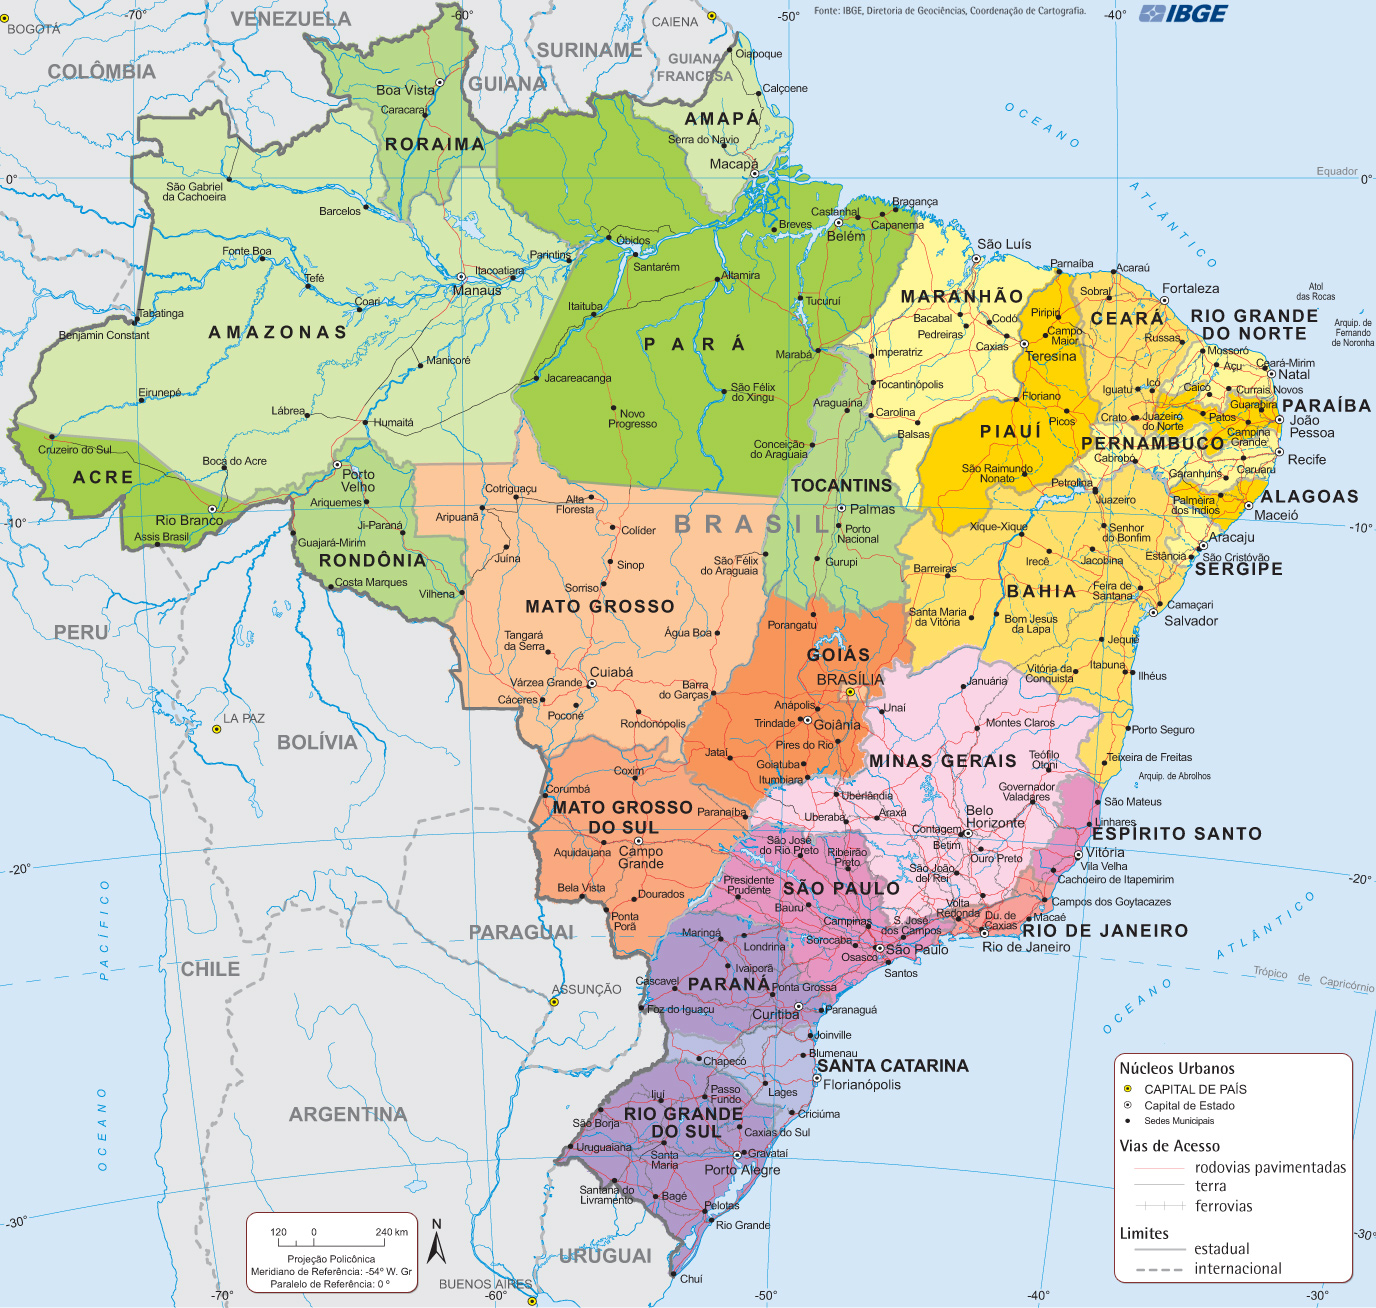 mapa do brasil estados e cidades Mapa do Brasil: Estados, Capitais, Tipos de mapa e Exercícios (QUIZ)